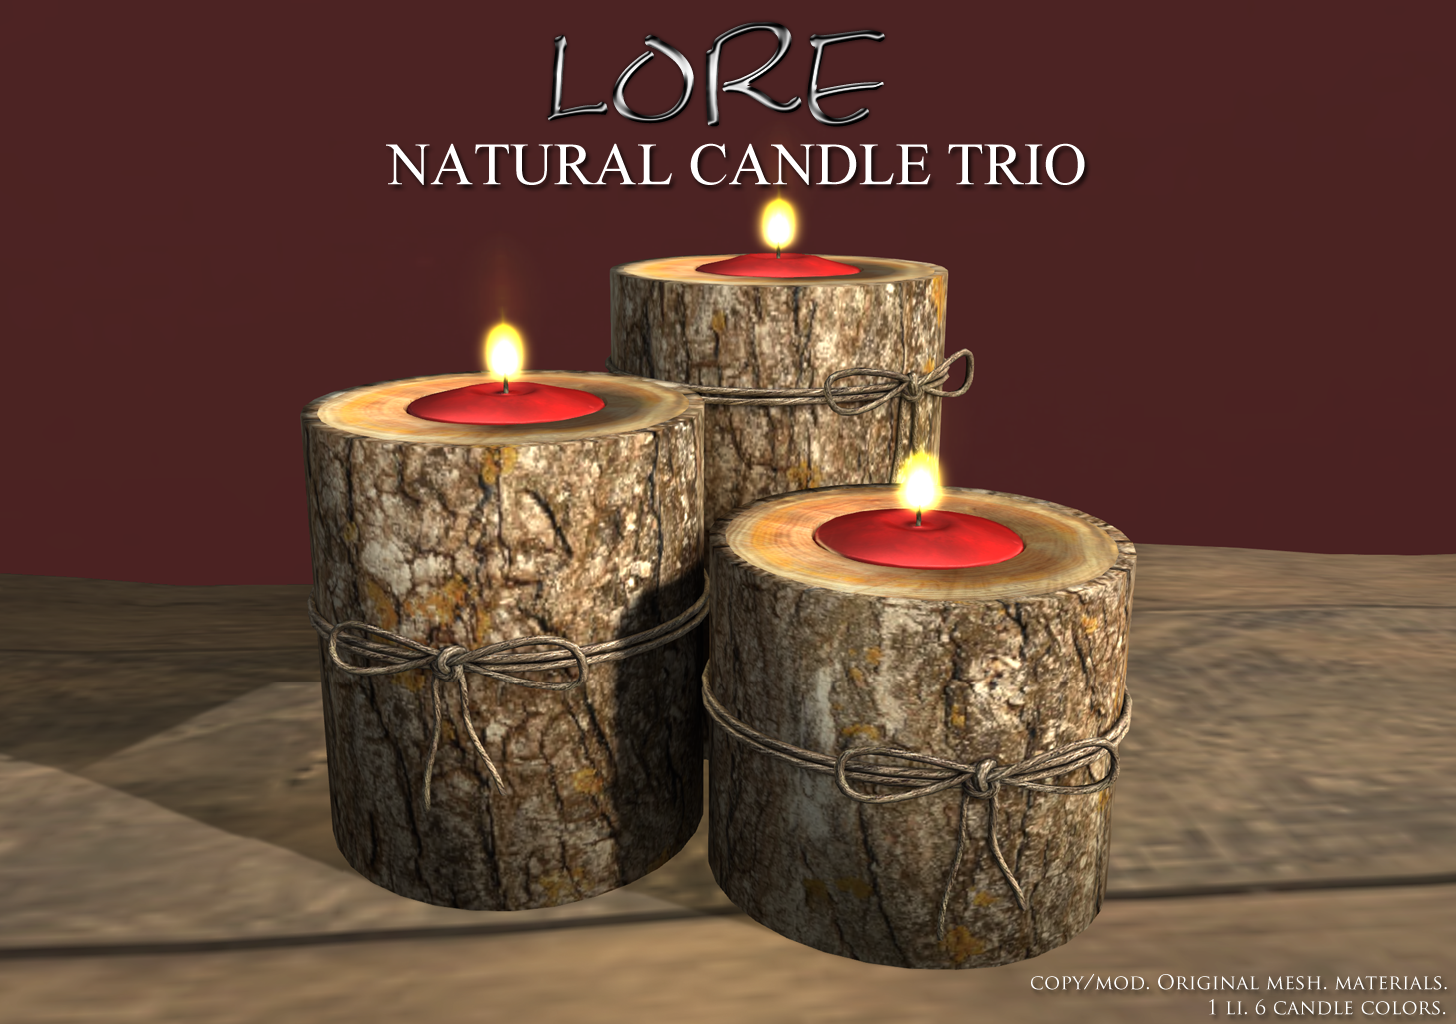 Natural Candle Trio Ad